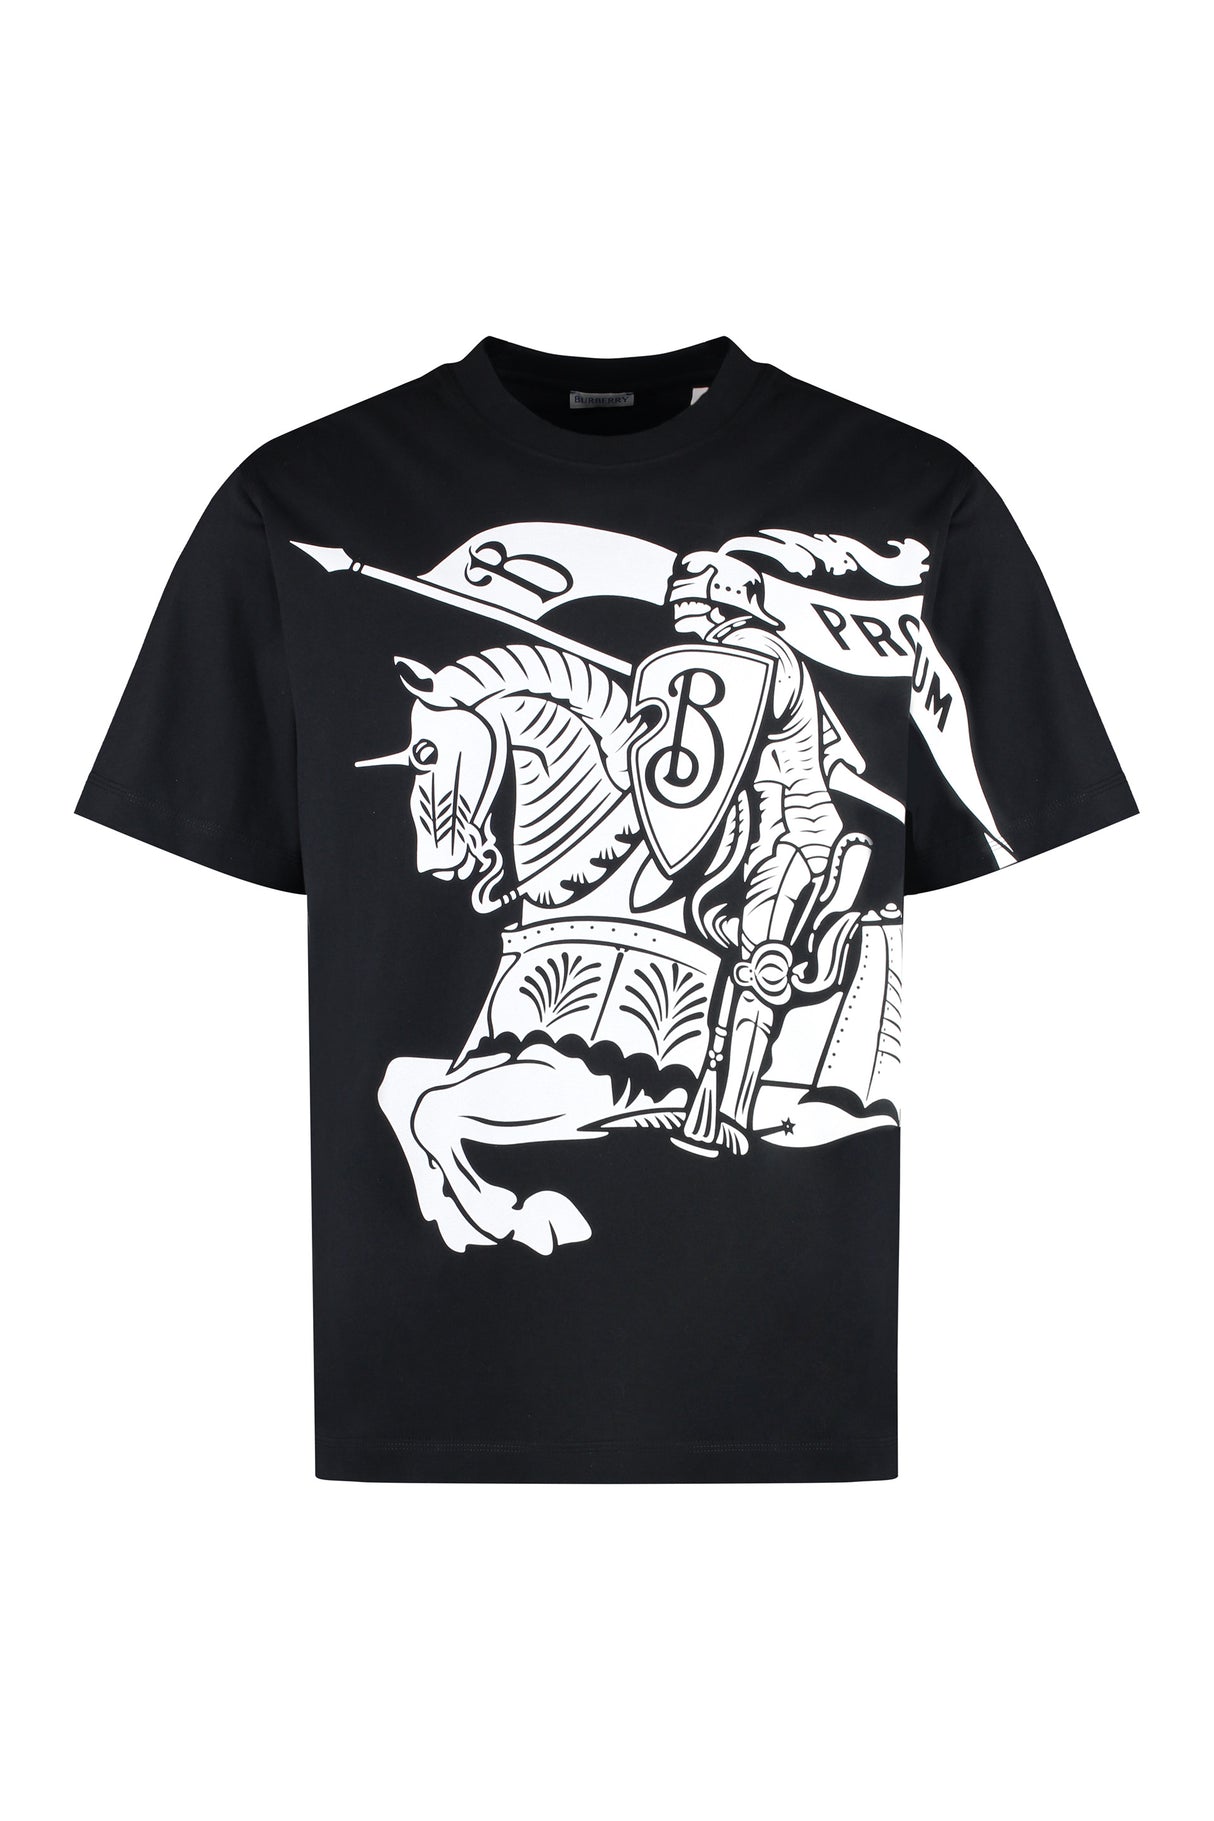 BURBERRY Men's Black Cotton T-Shirt with Logo Print